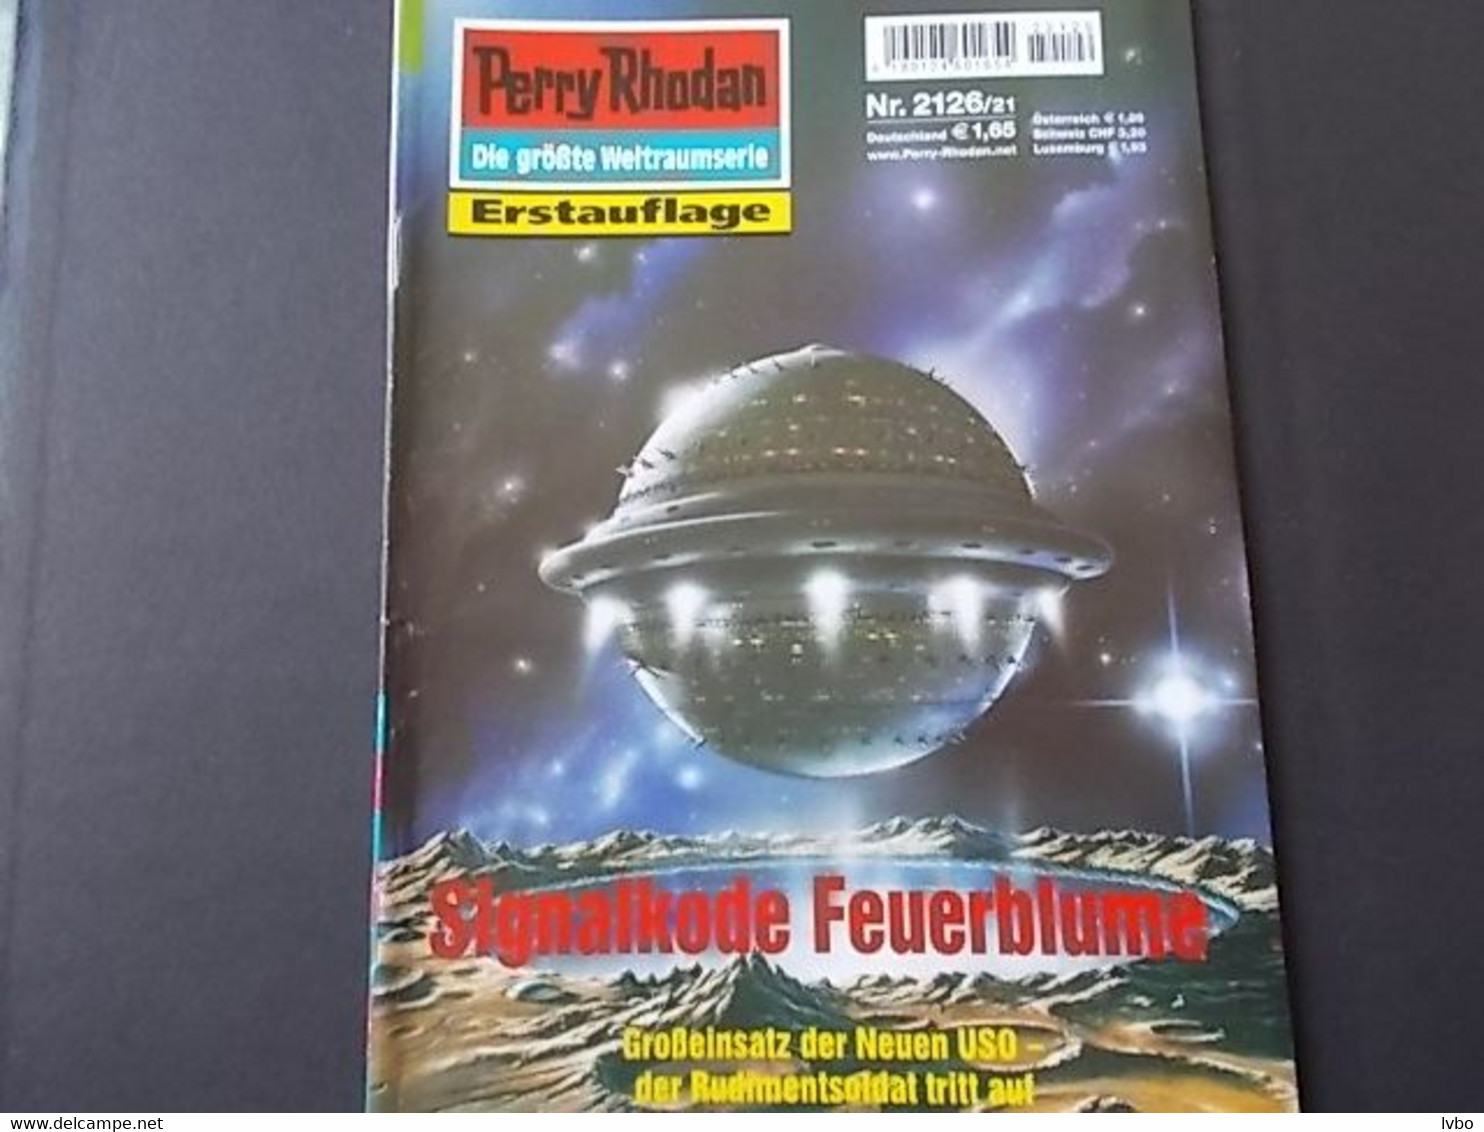 Perry Rhodan Nr 2126 Erstauflage Signalkode Feuerblume - Sci-Fi